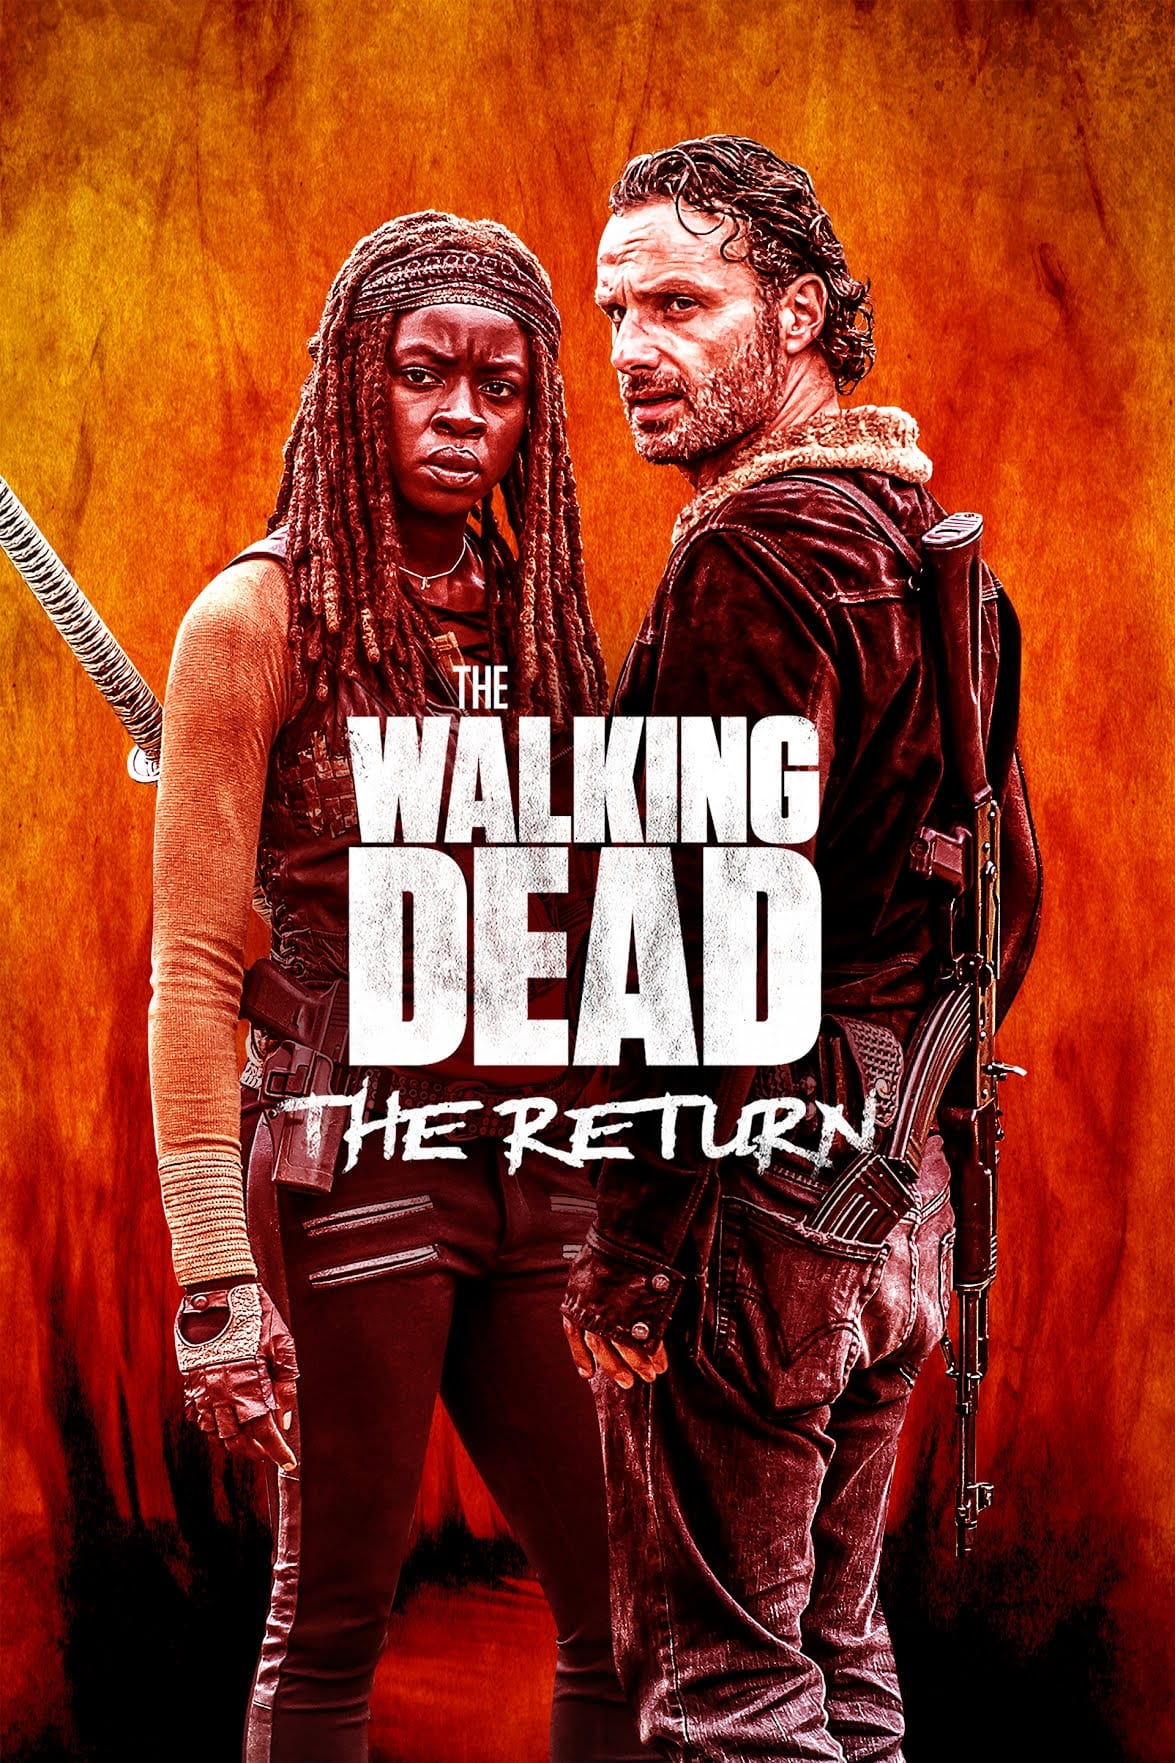 The Walking Dead: The Return film